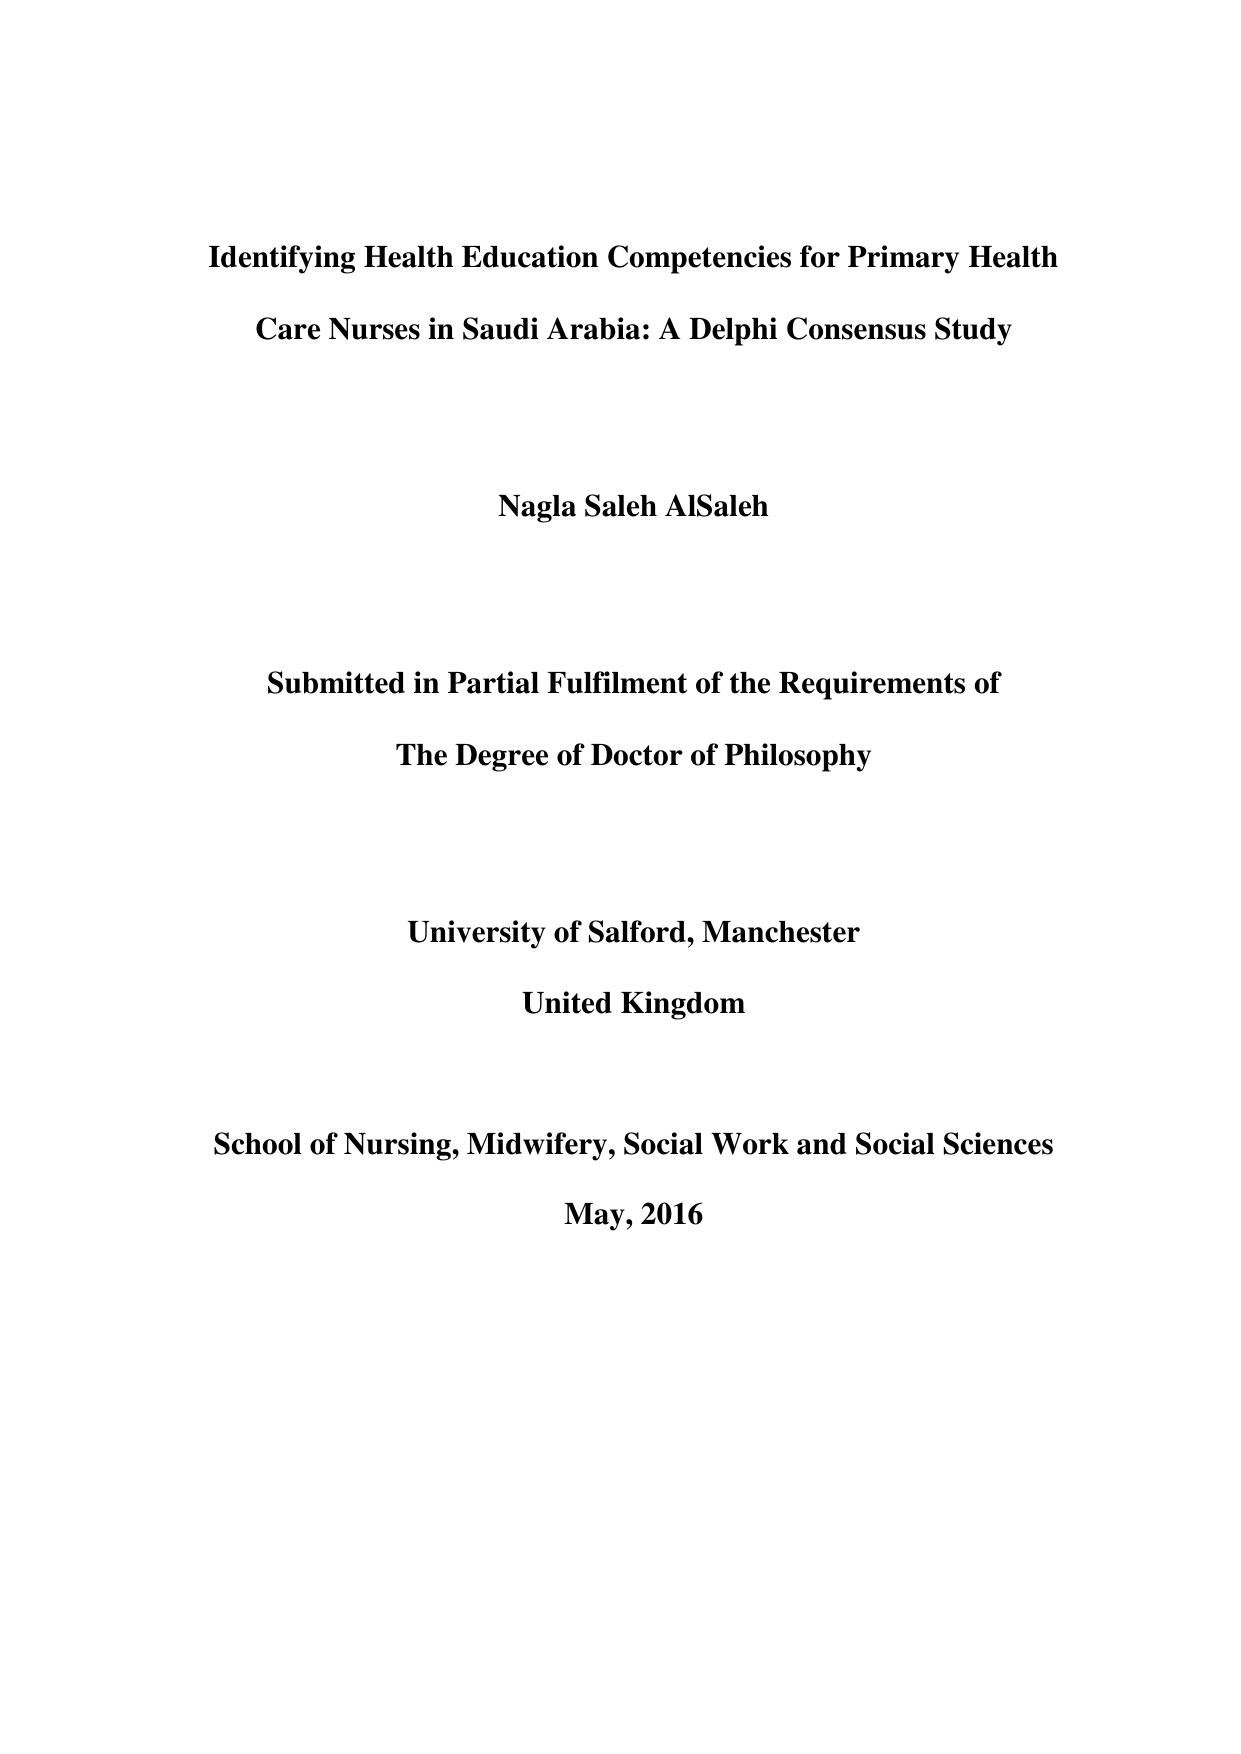 Identifying Health Education Competencies for Primary Health Care Nurses in Saudi Arabia 2016